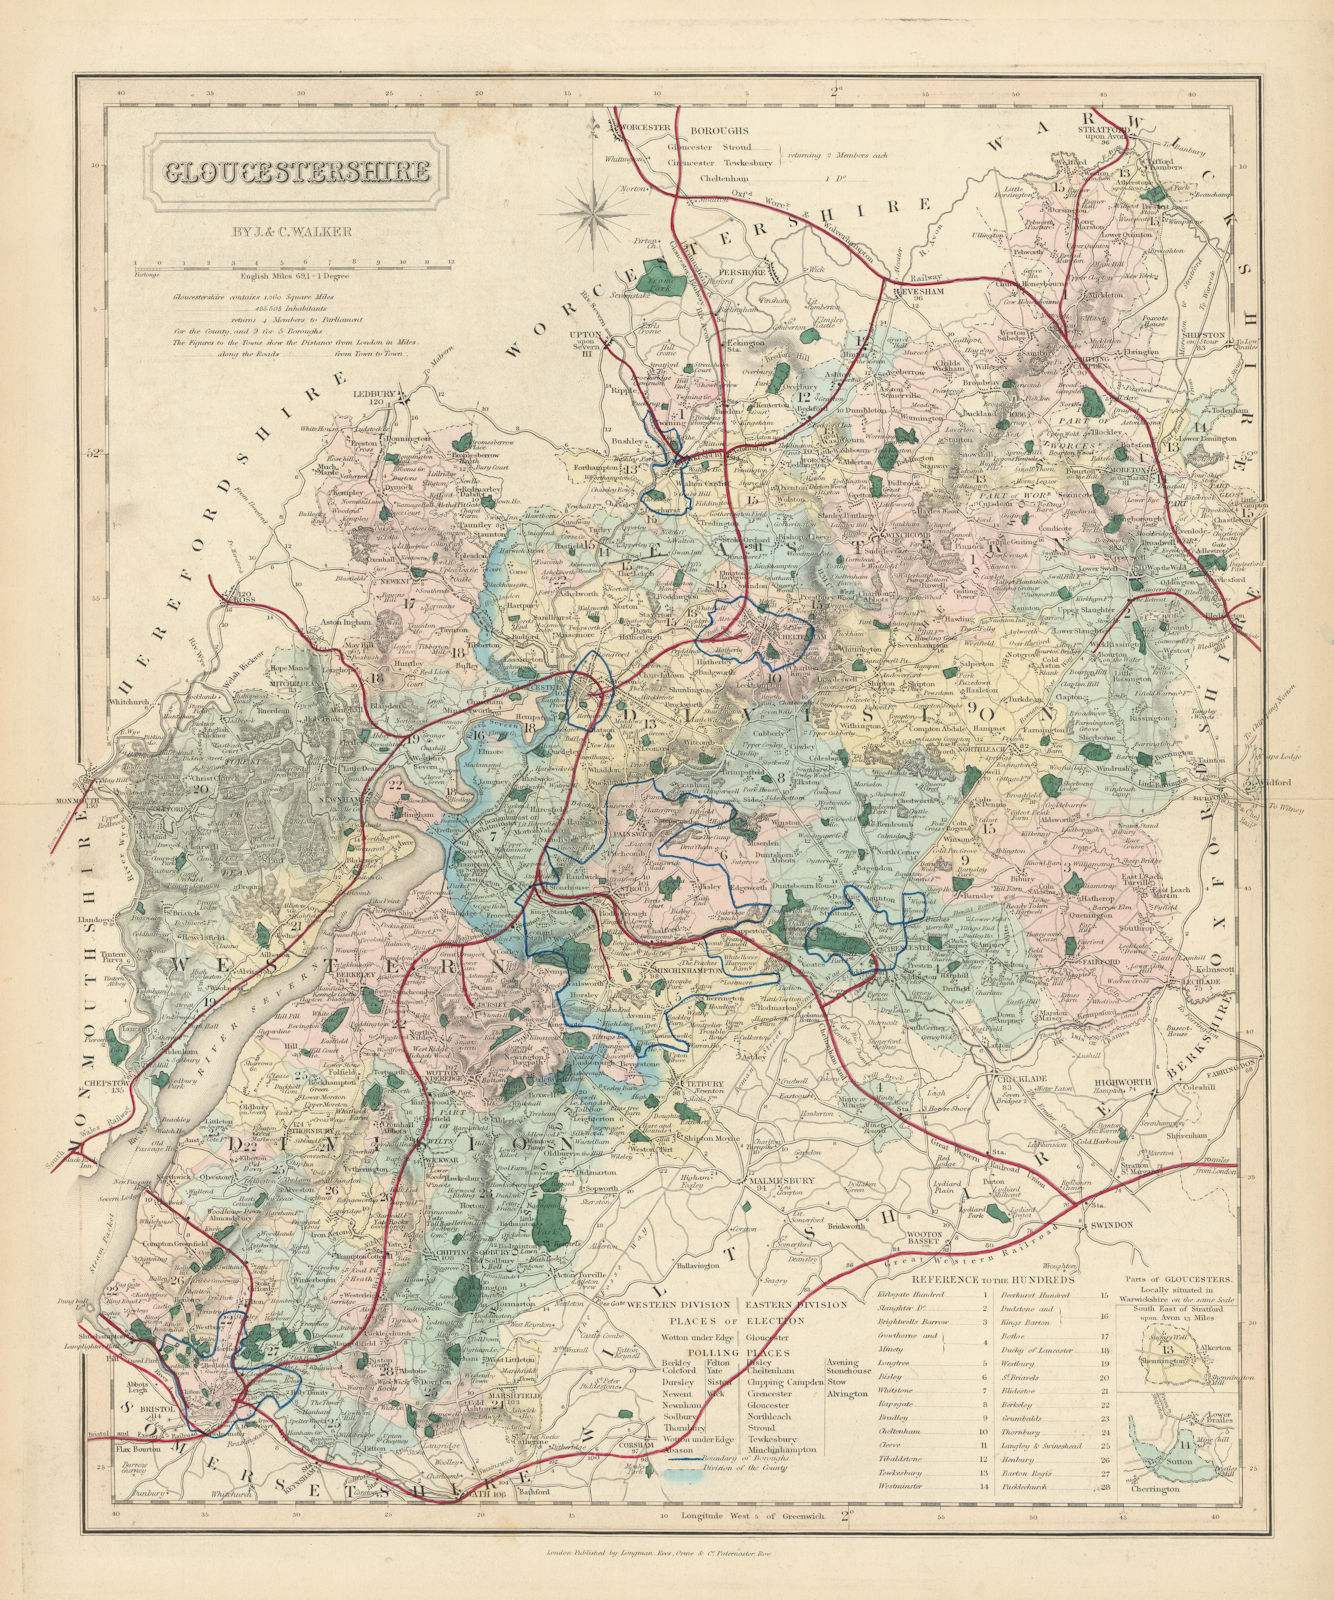 Gloucestershire antique county map by J & C Walker. Railways & boroughs 1870